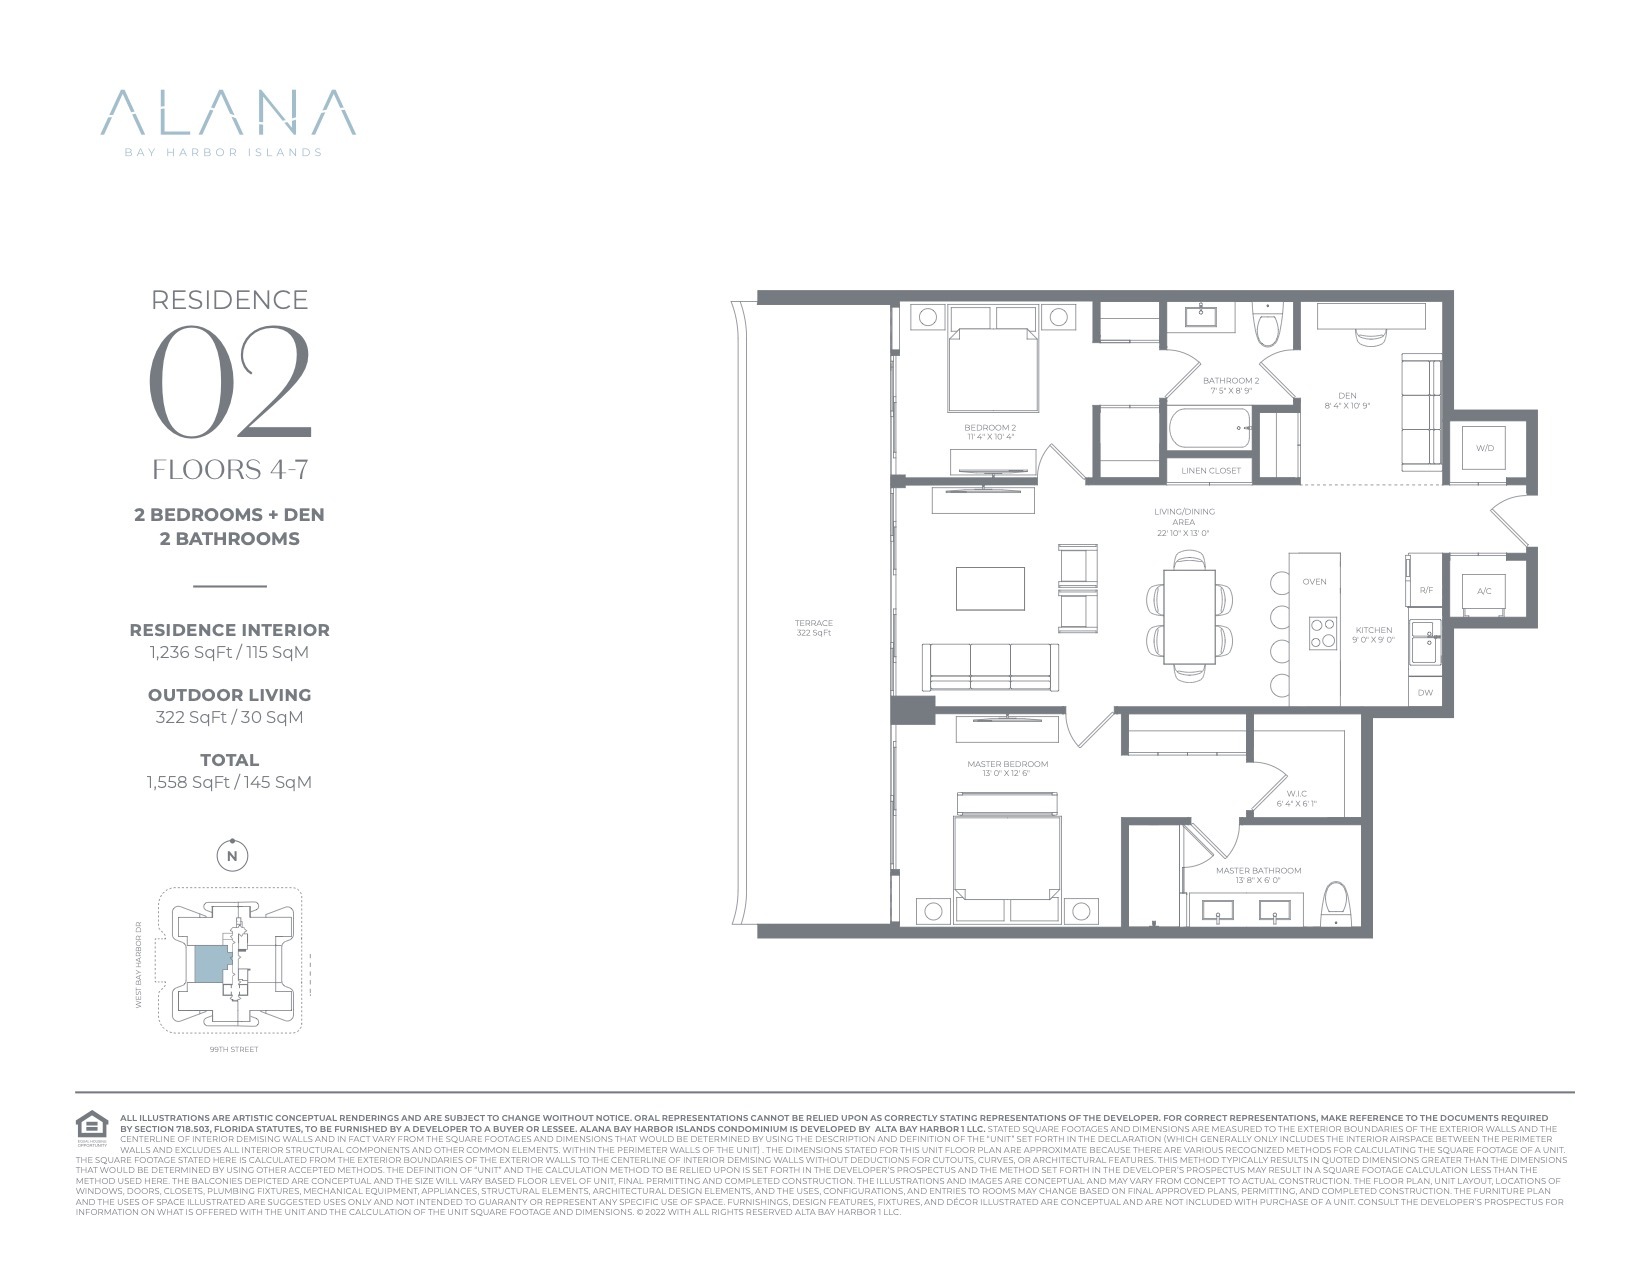 Floor Plan for Alana Bay Harbor Island Floorplans, Residence 02 Floors 4-7